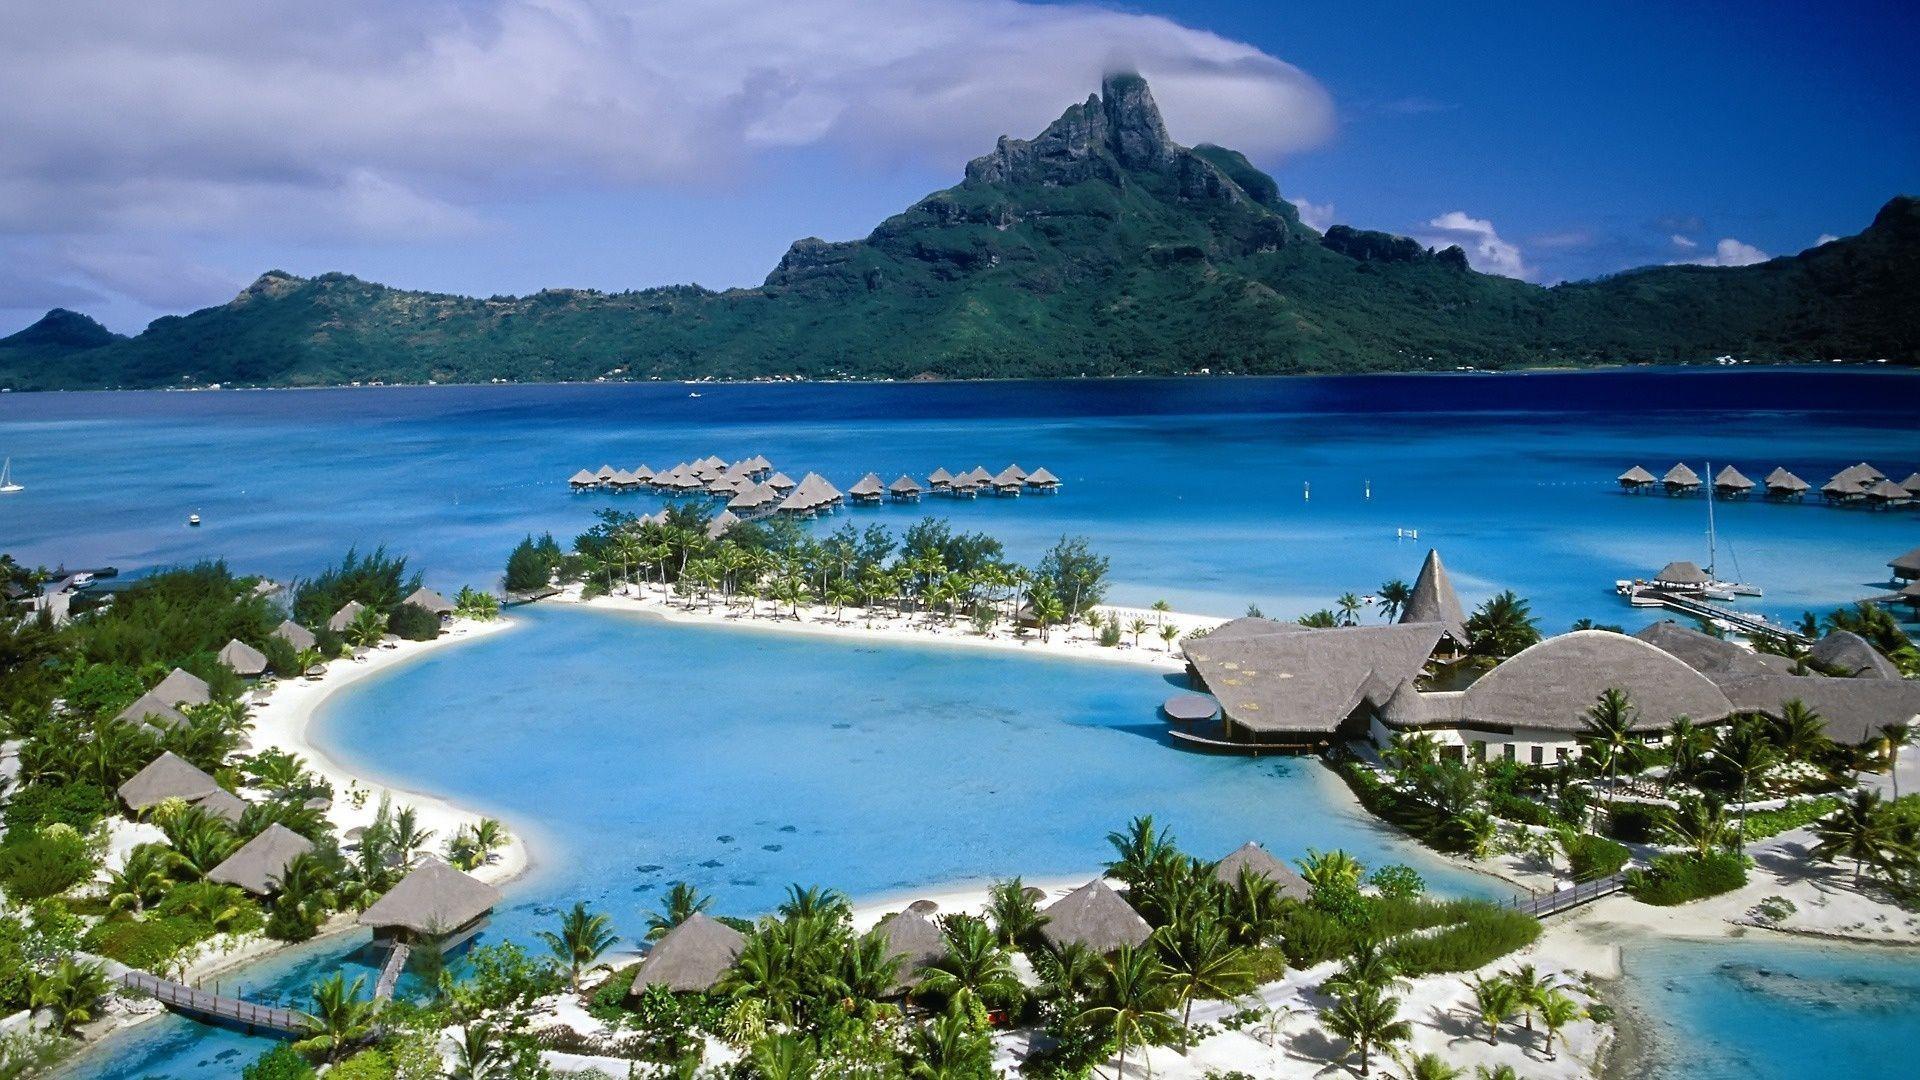 image For > Tahiti Islands Beach